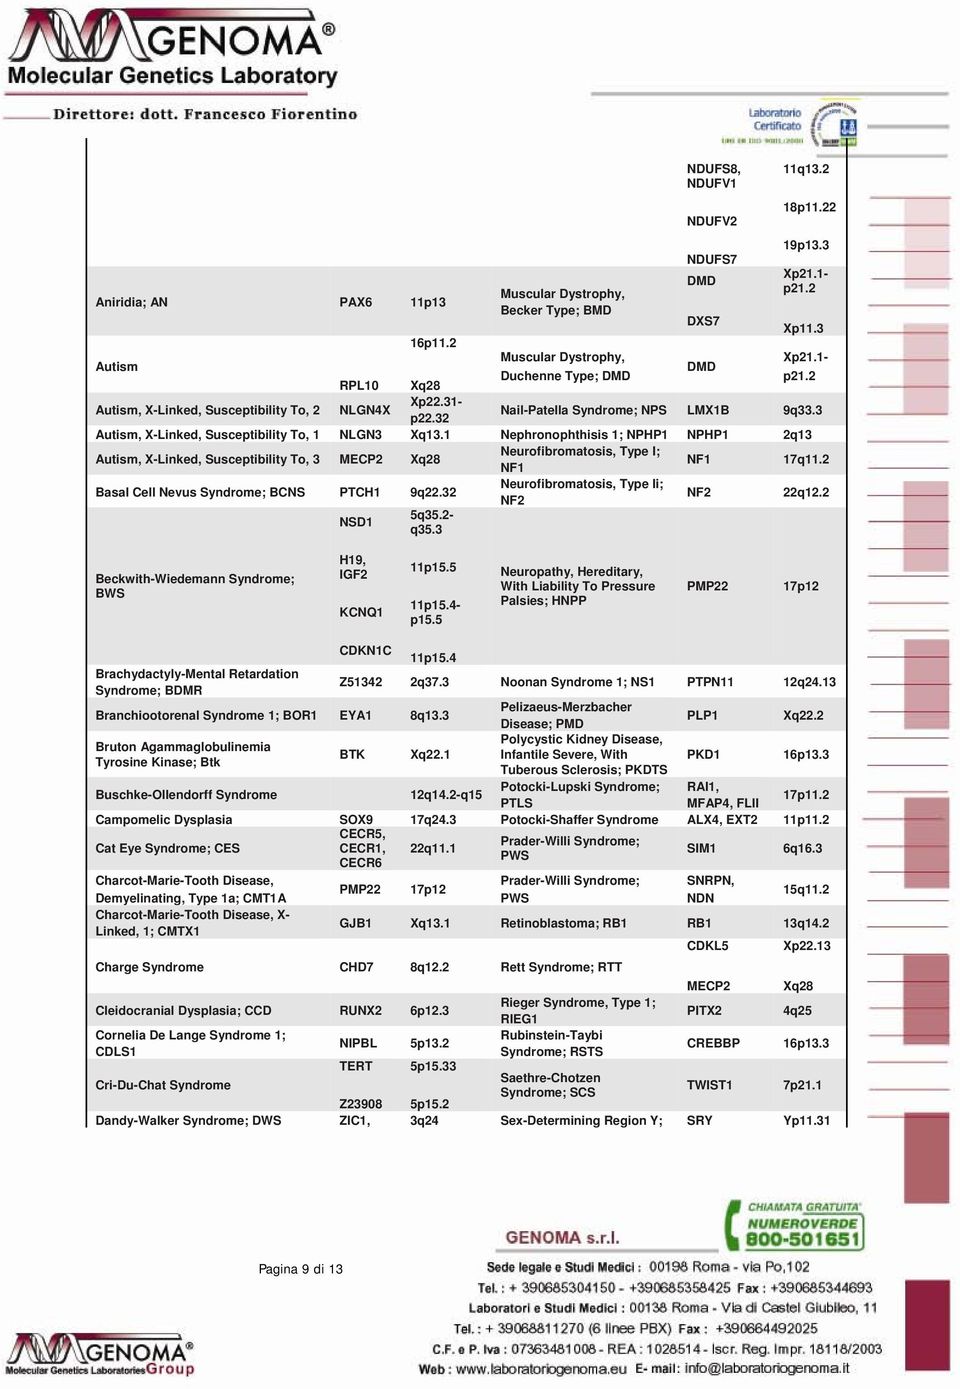 32 Autism, X-Linked, Susceptibility To, 1 NLGN3 Xq13.1 Nephronophthisis 1; NPHP1 NPHP1 2q13 Neurofibromatosis, Type I; Autism, X-Linked, Susceptibility To, 3 MECP2 Xq28 NF1 NF1 17q11.